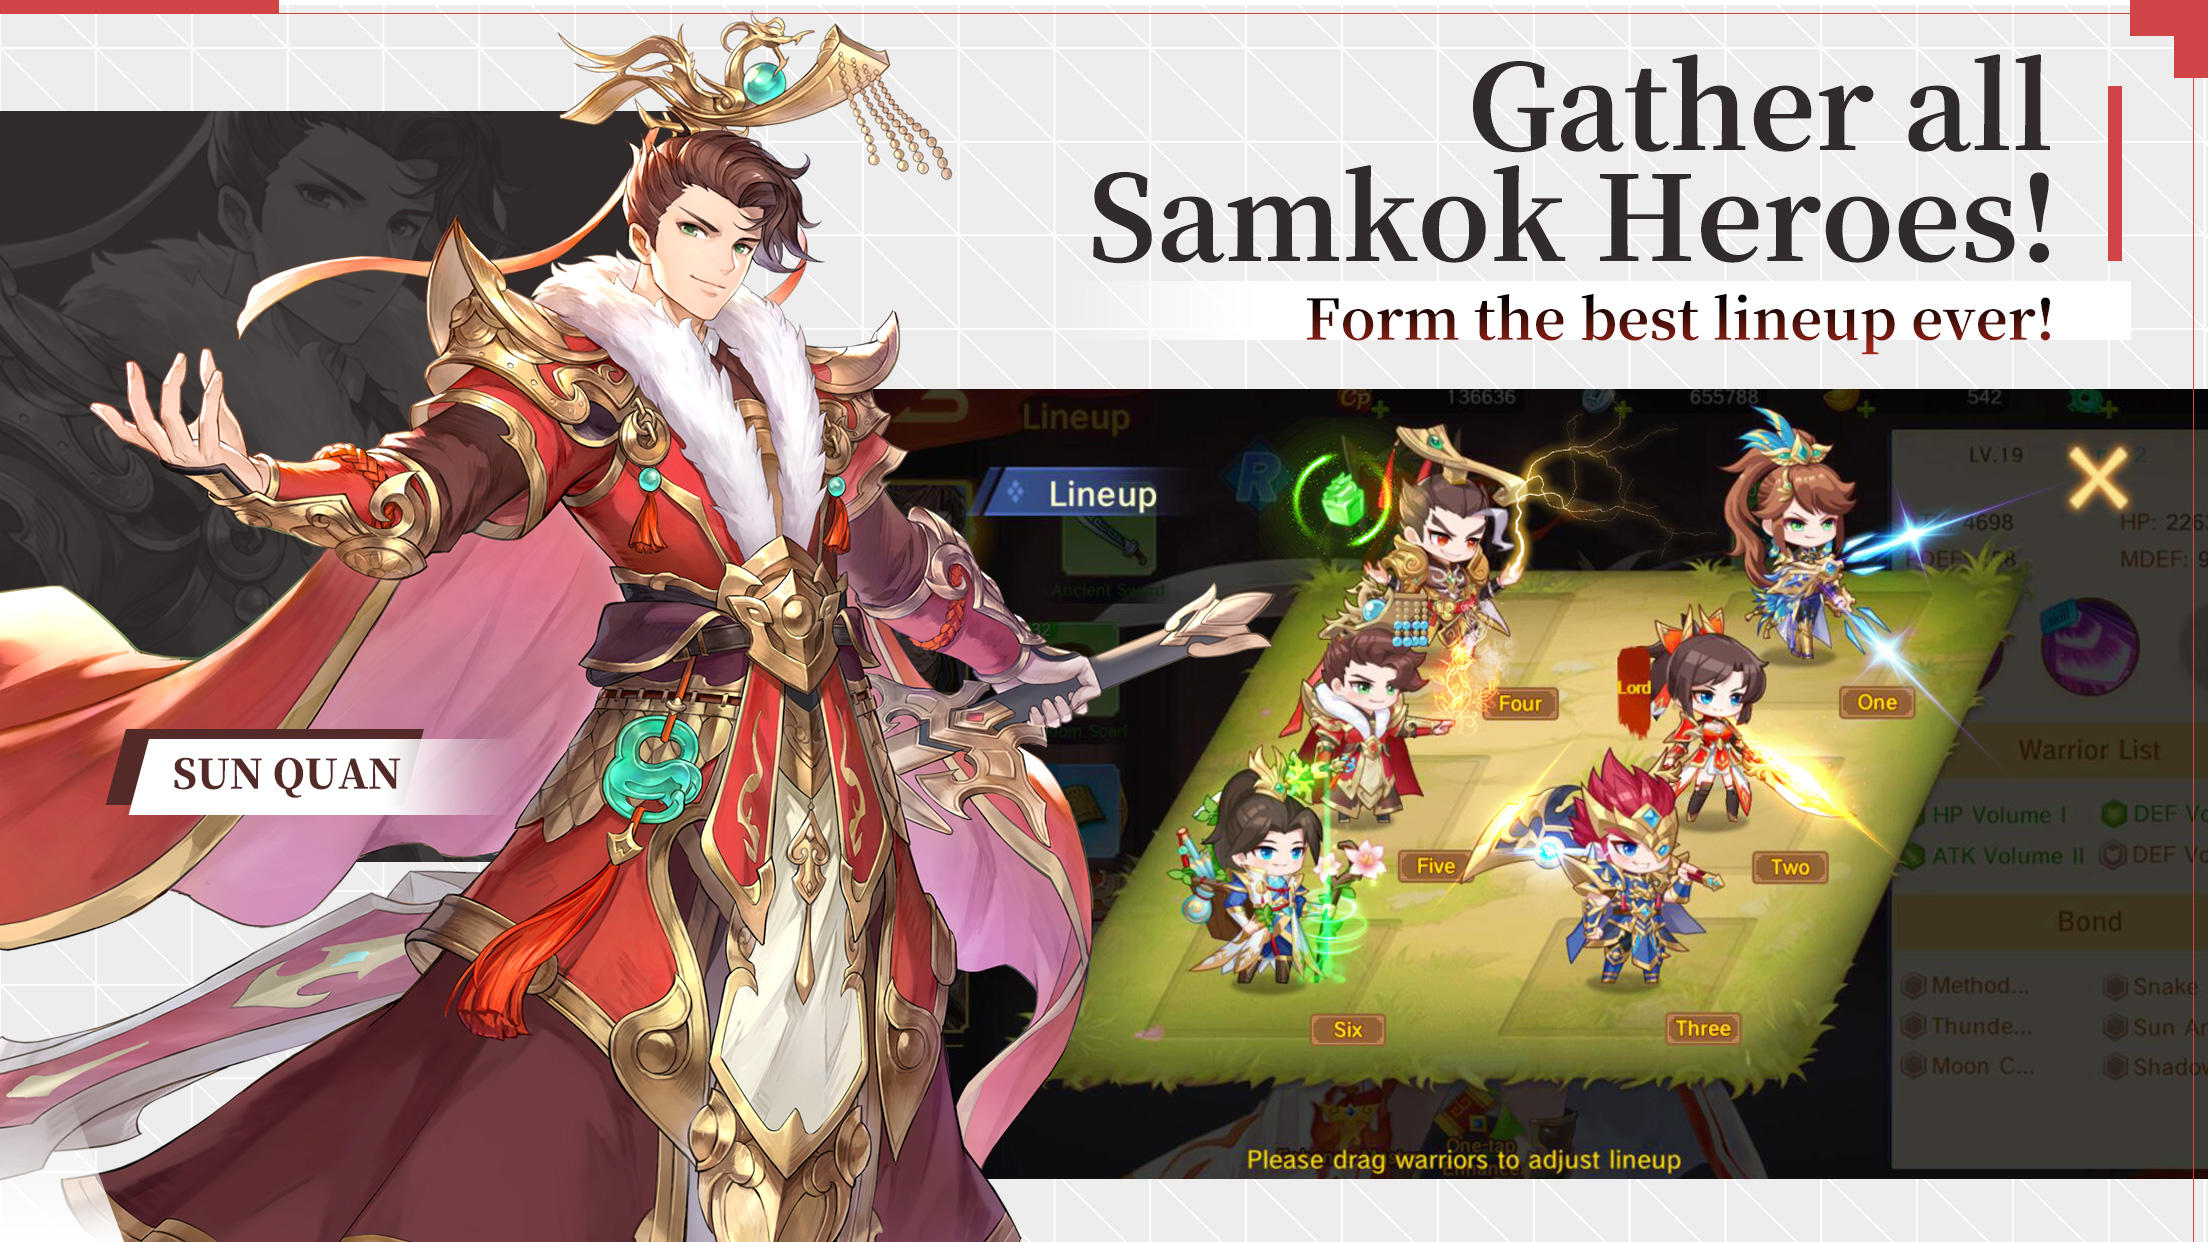 Dynasty Heroes: Romance Samkok